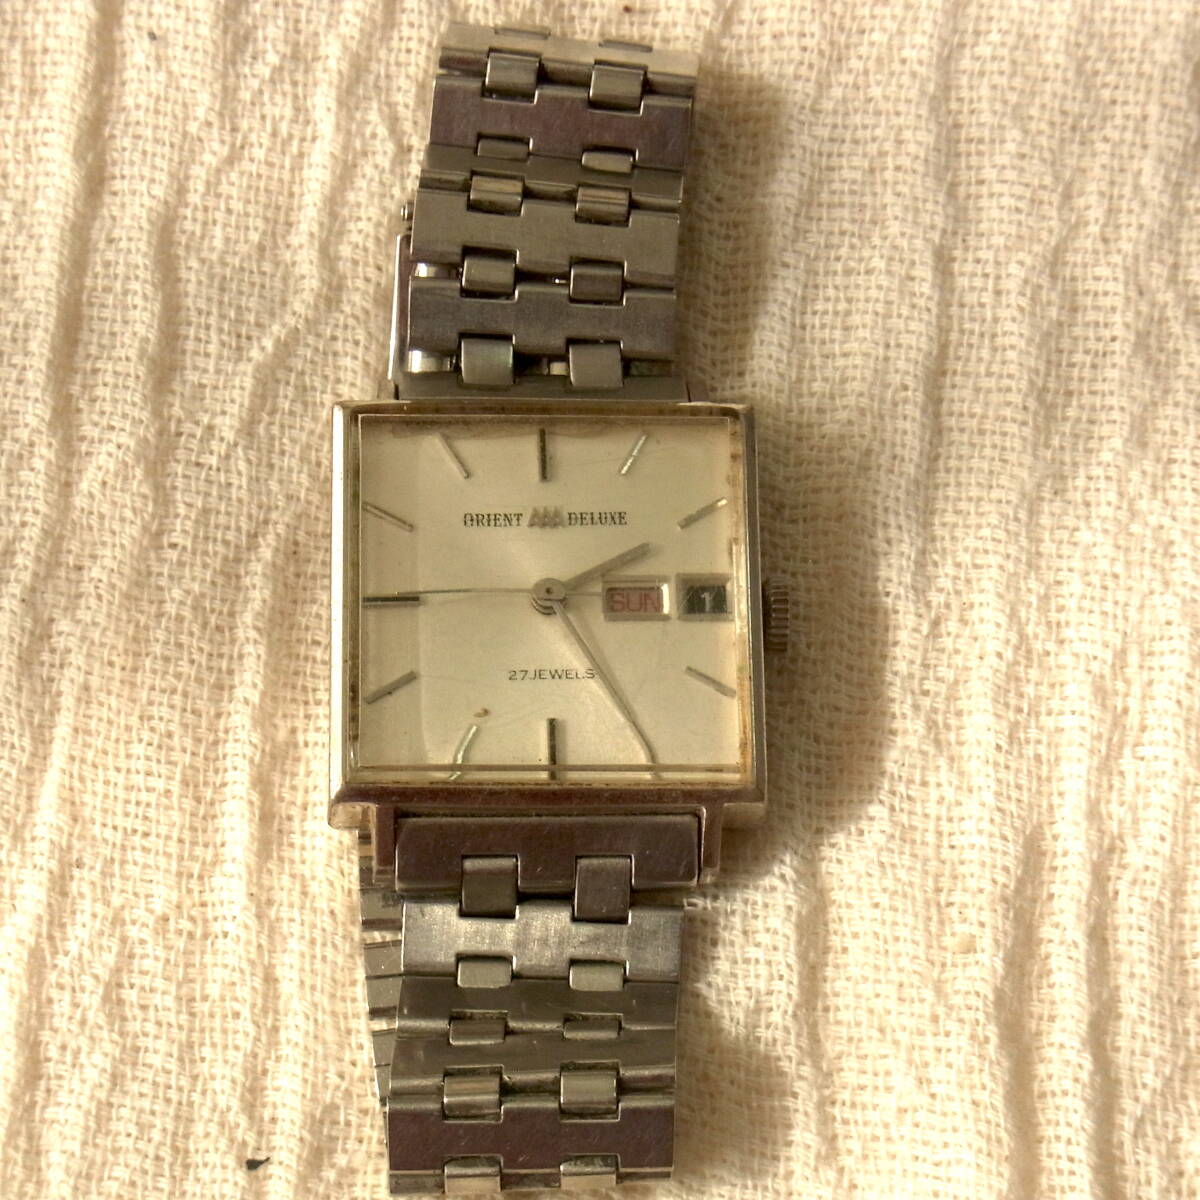 ORIENT AAA DELUXE／S 19503／メンズ腕時計／27石／デイデイト／昭和レトロの画像2